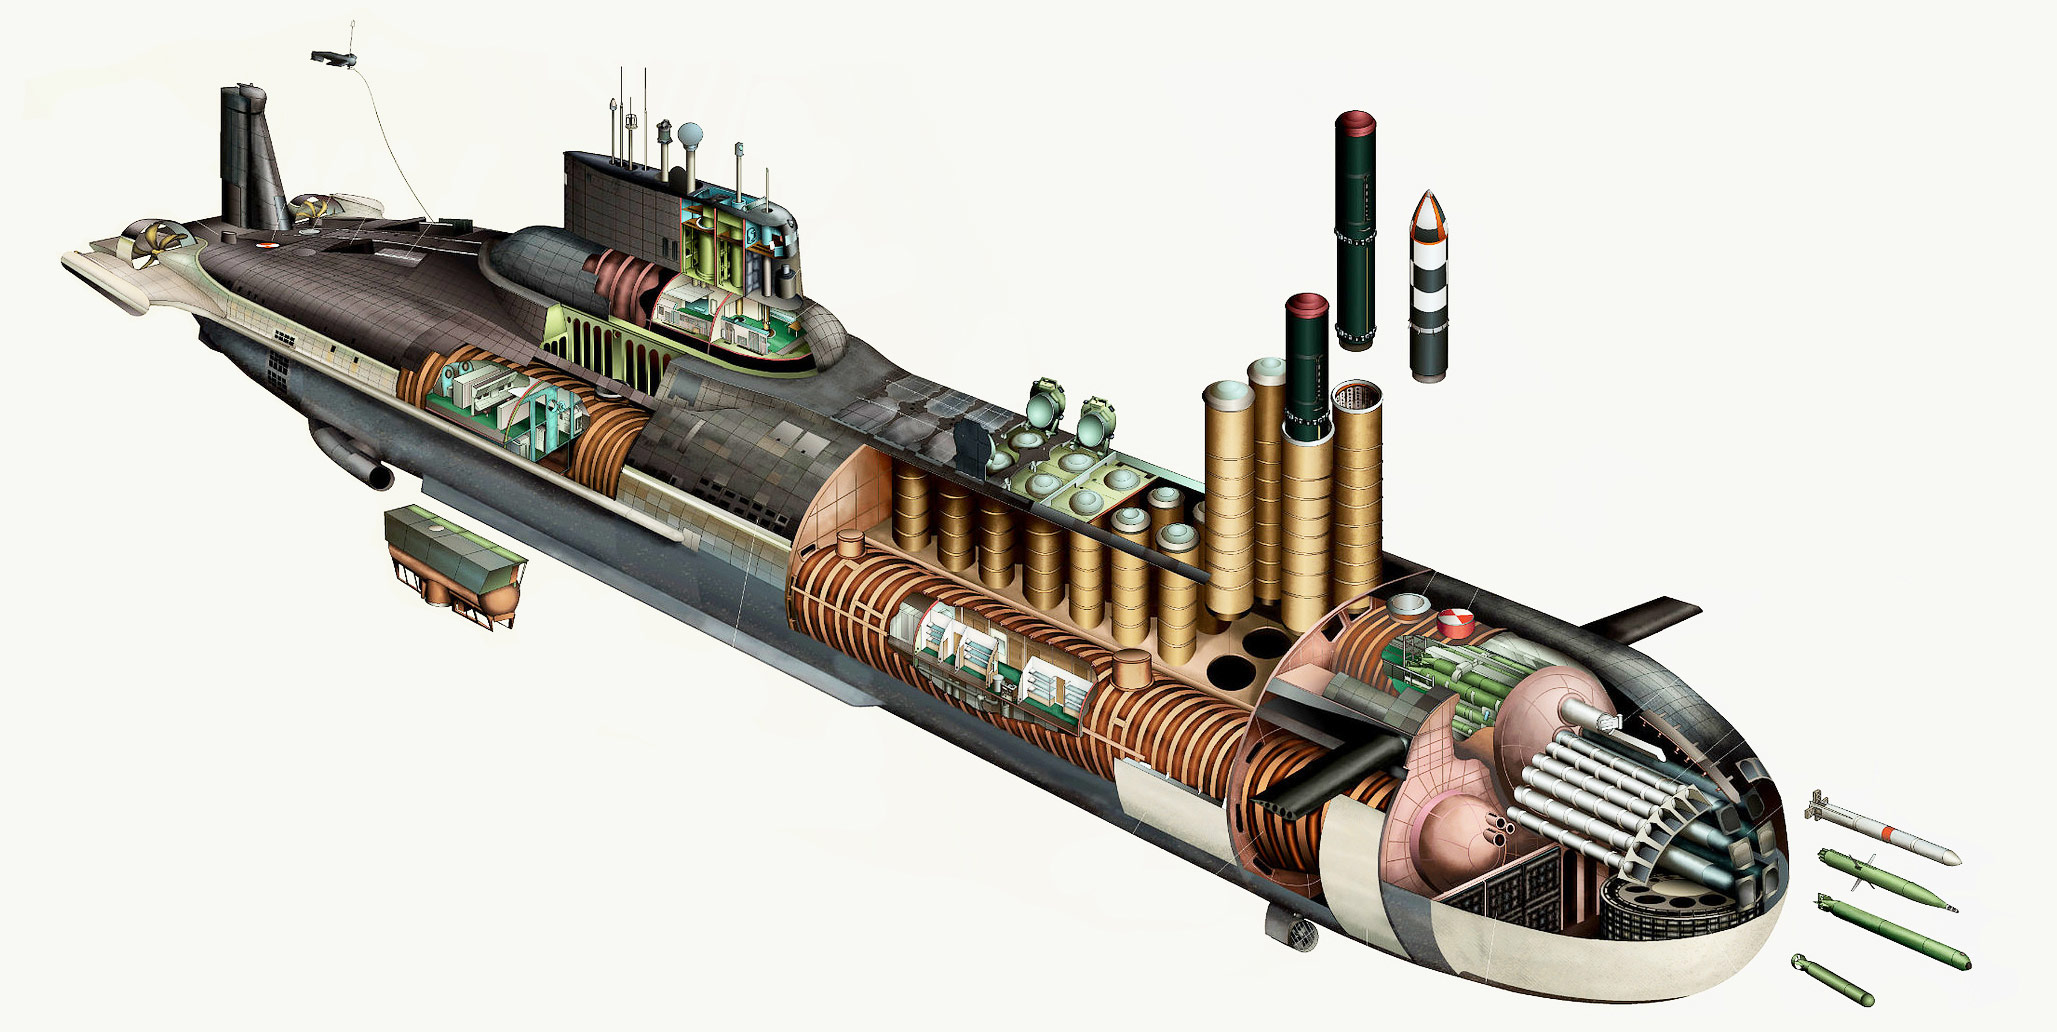 Typhoon_class_submarine.jpg